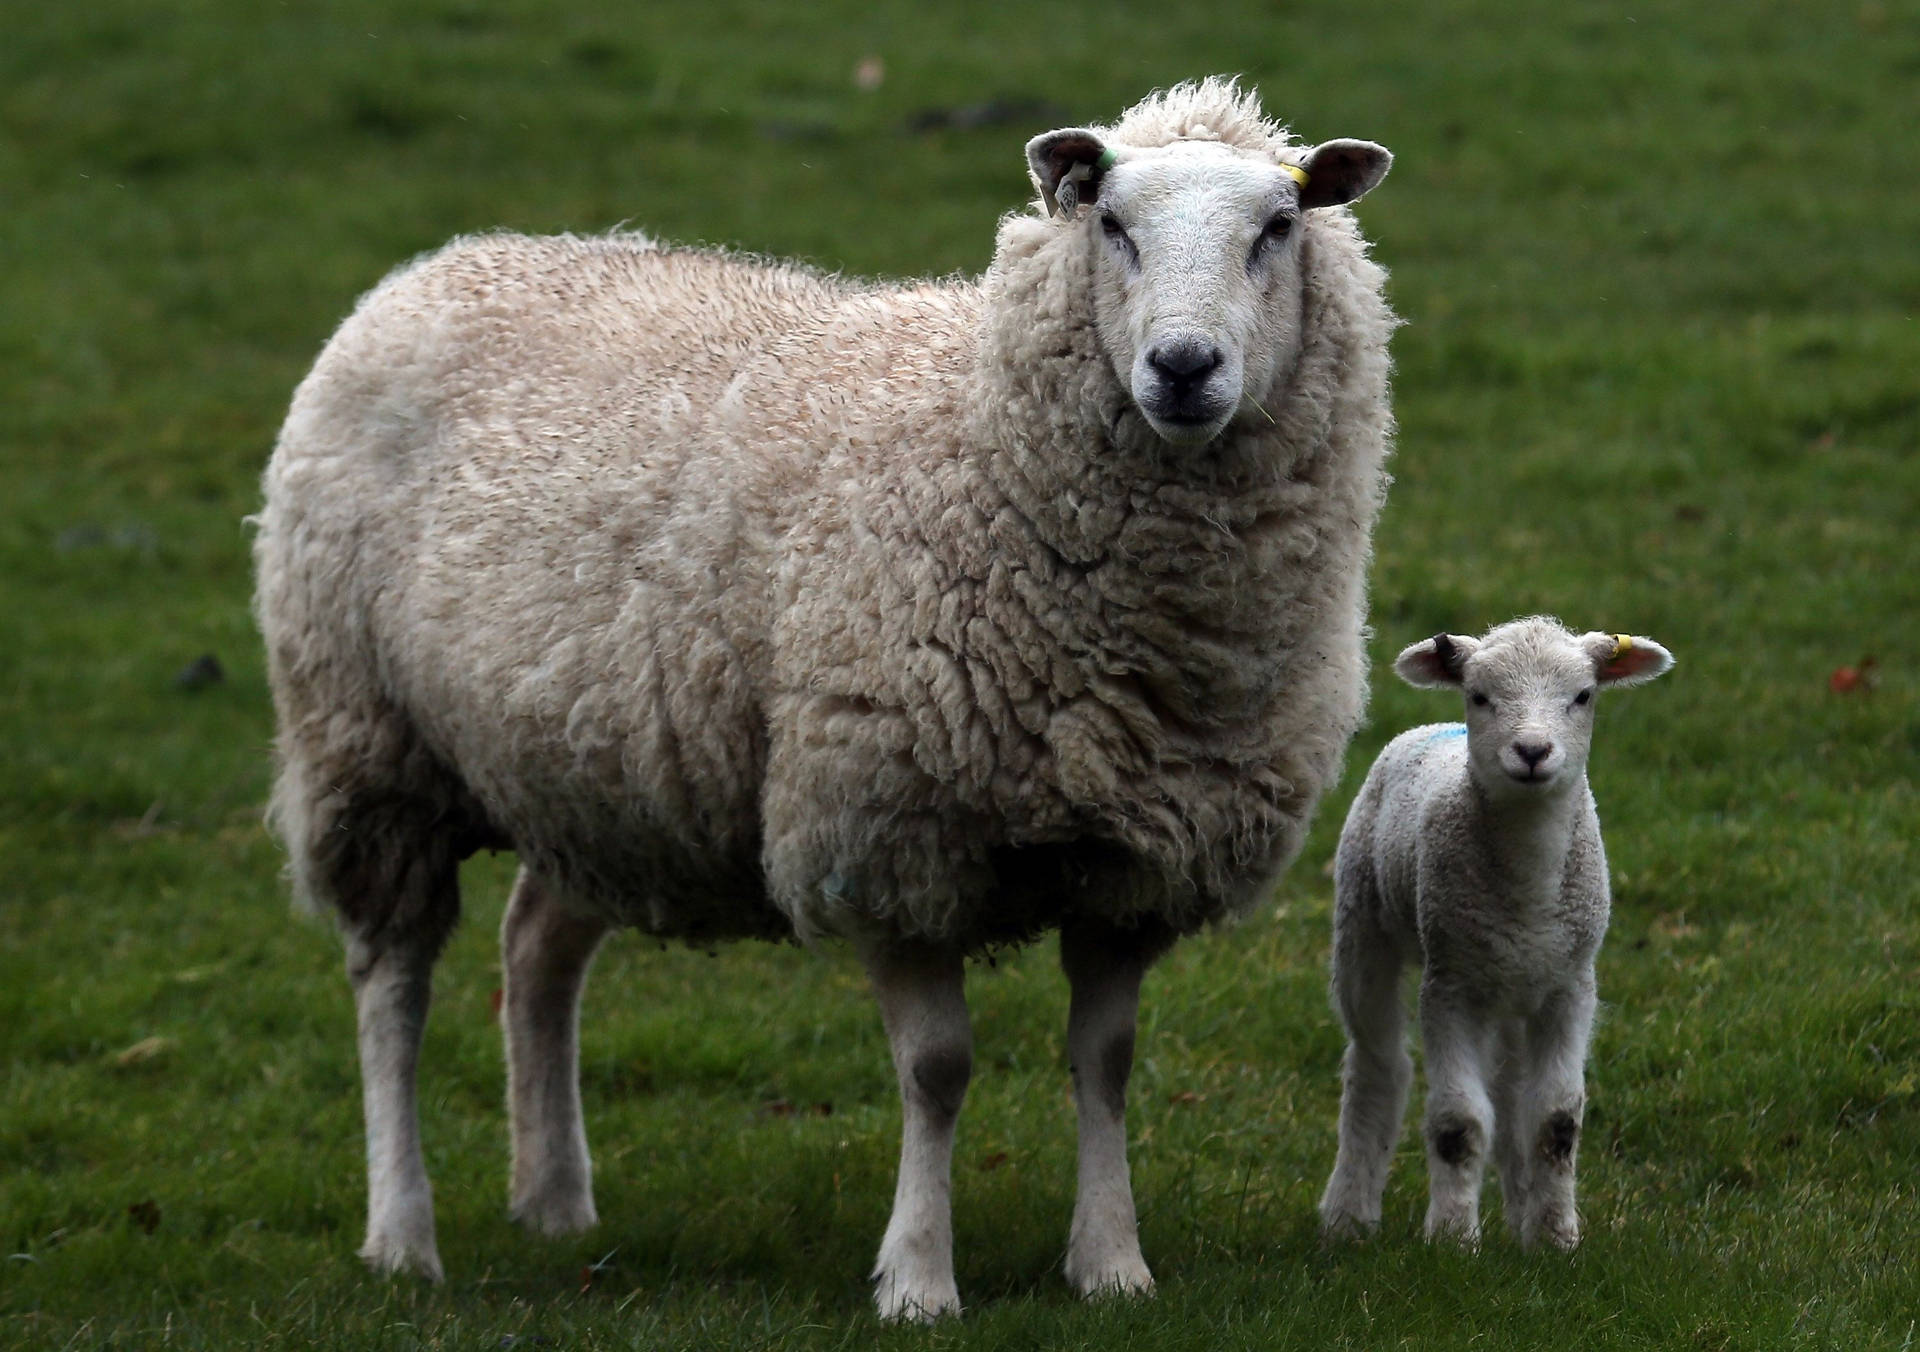 Lamb Next To Big Sheep Wallpaper